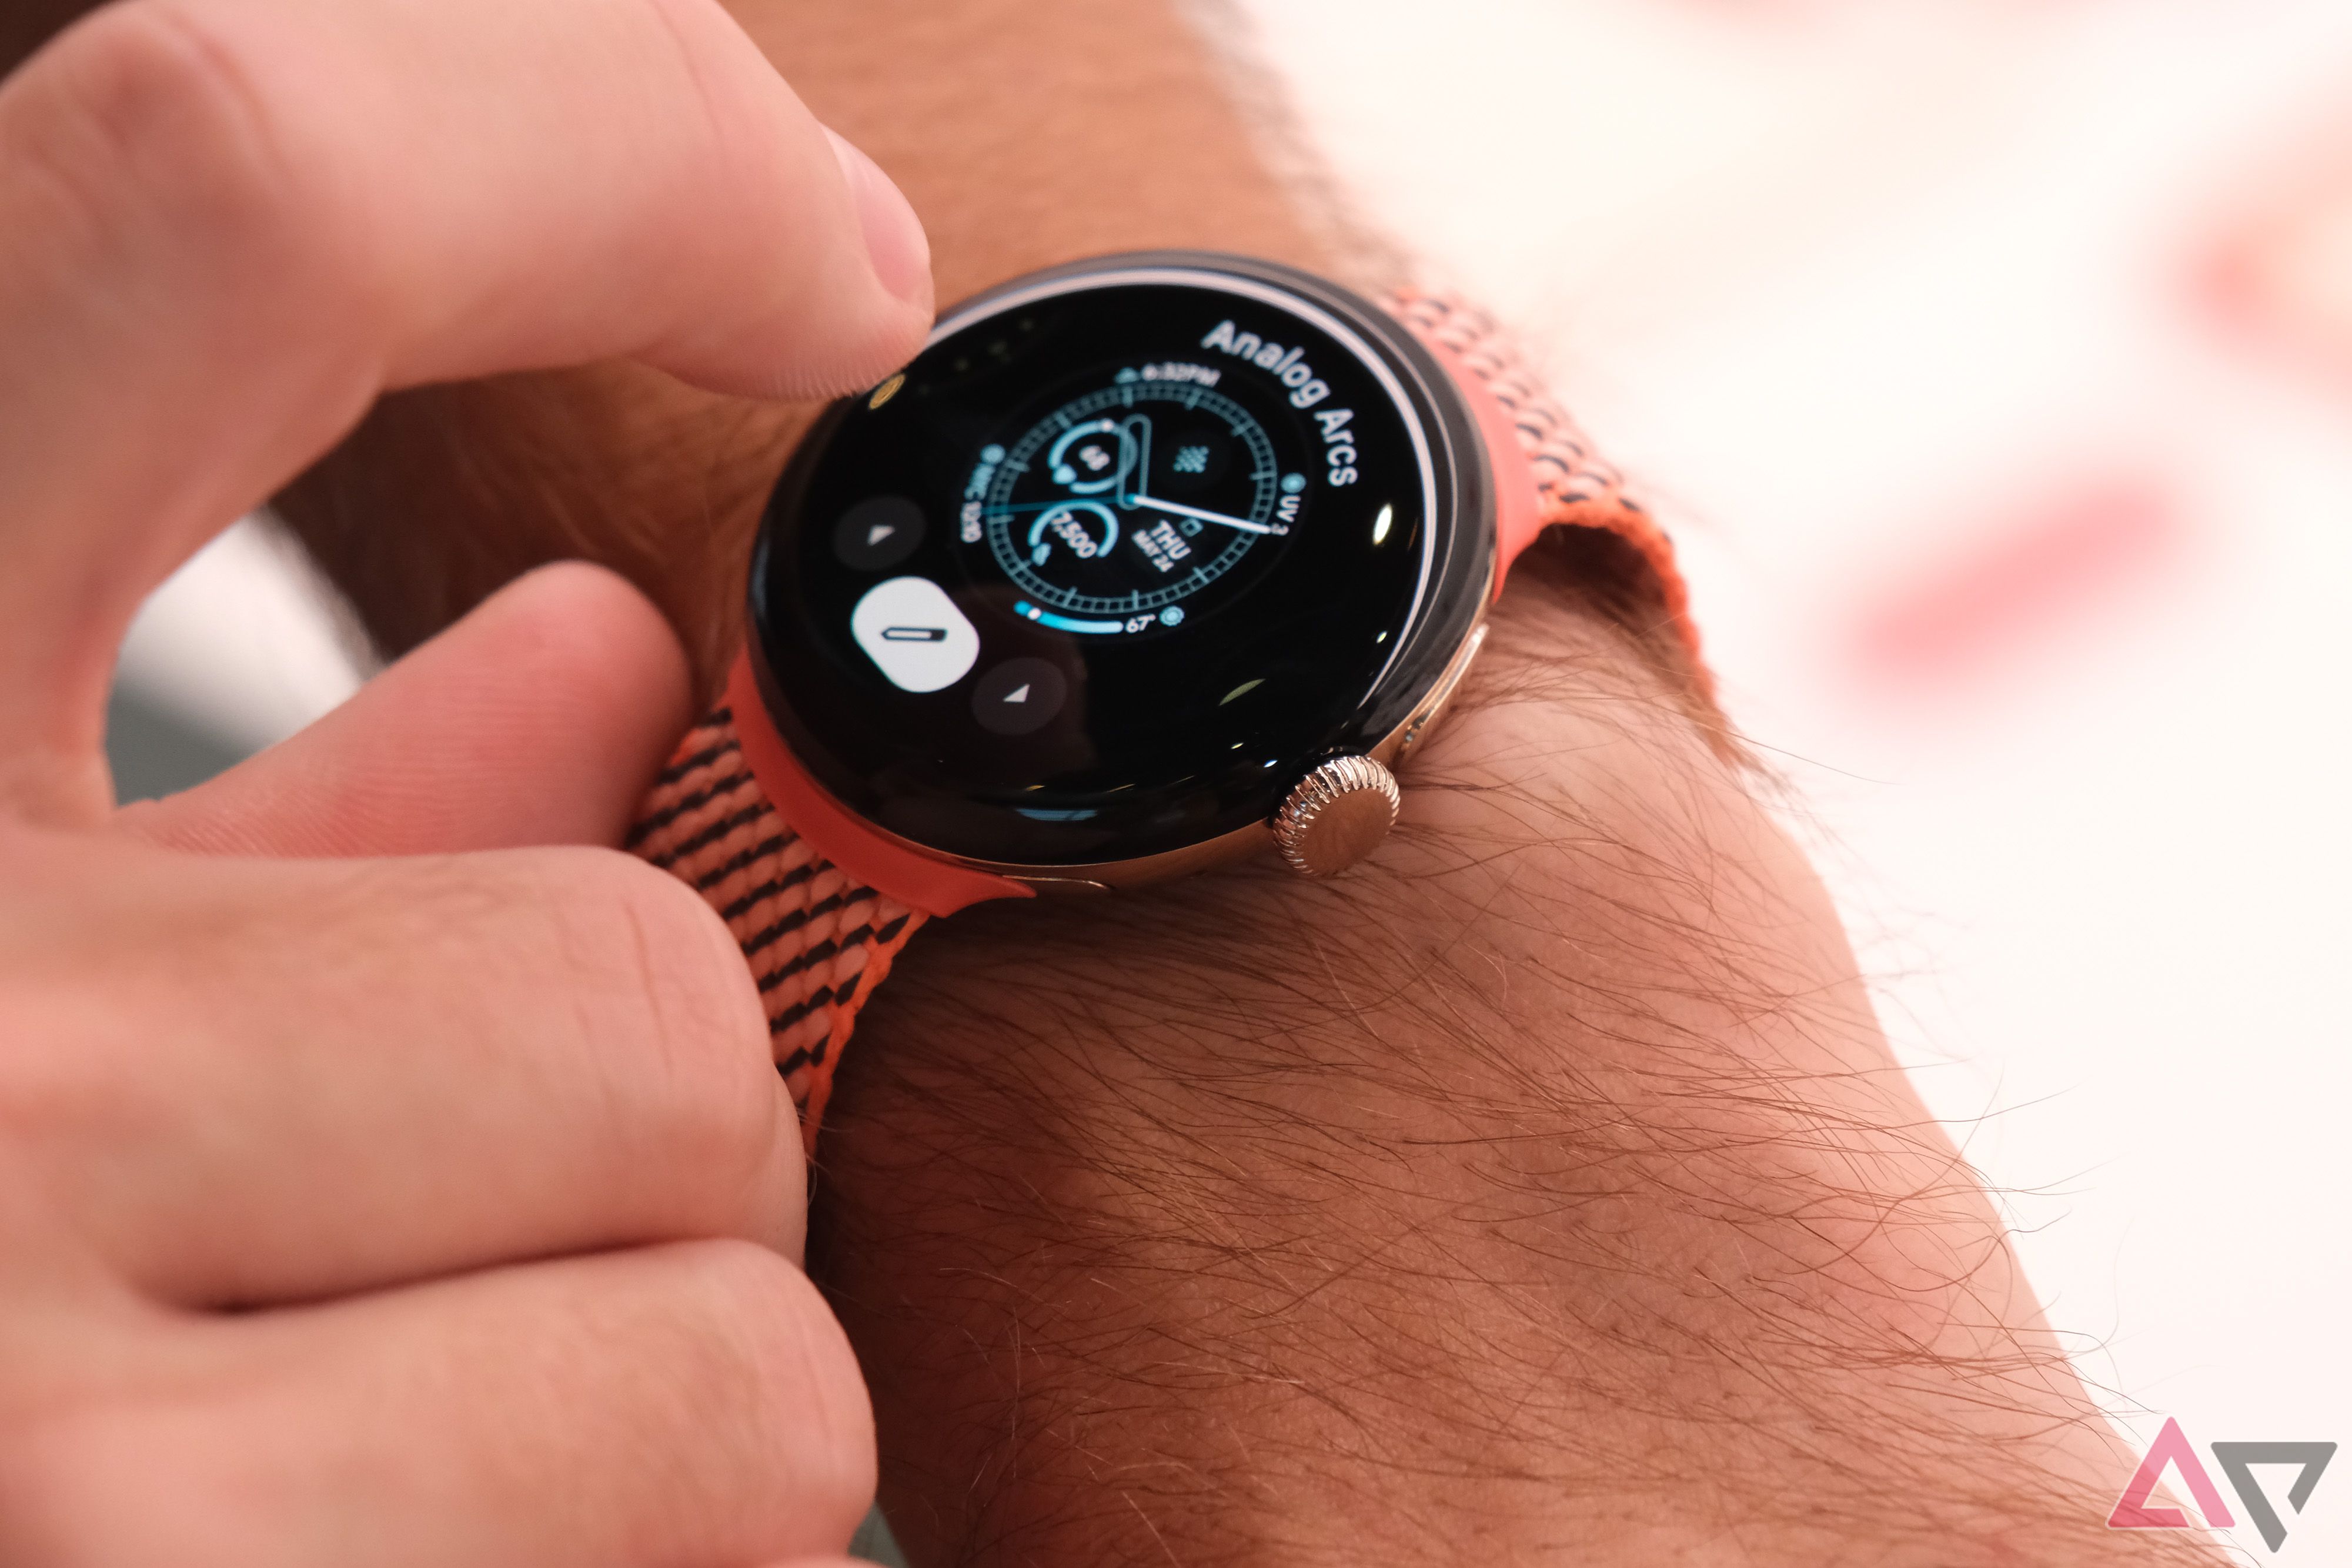 The Google Pixel Watch 2 displaying an analog watch face